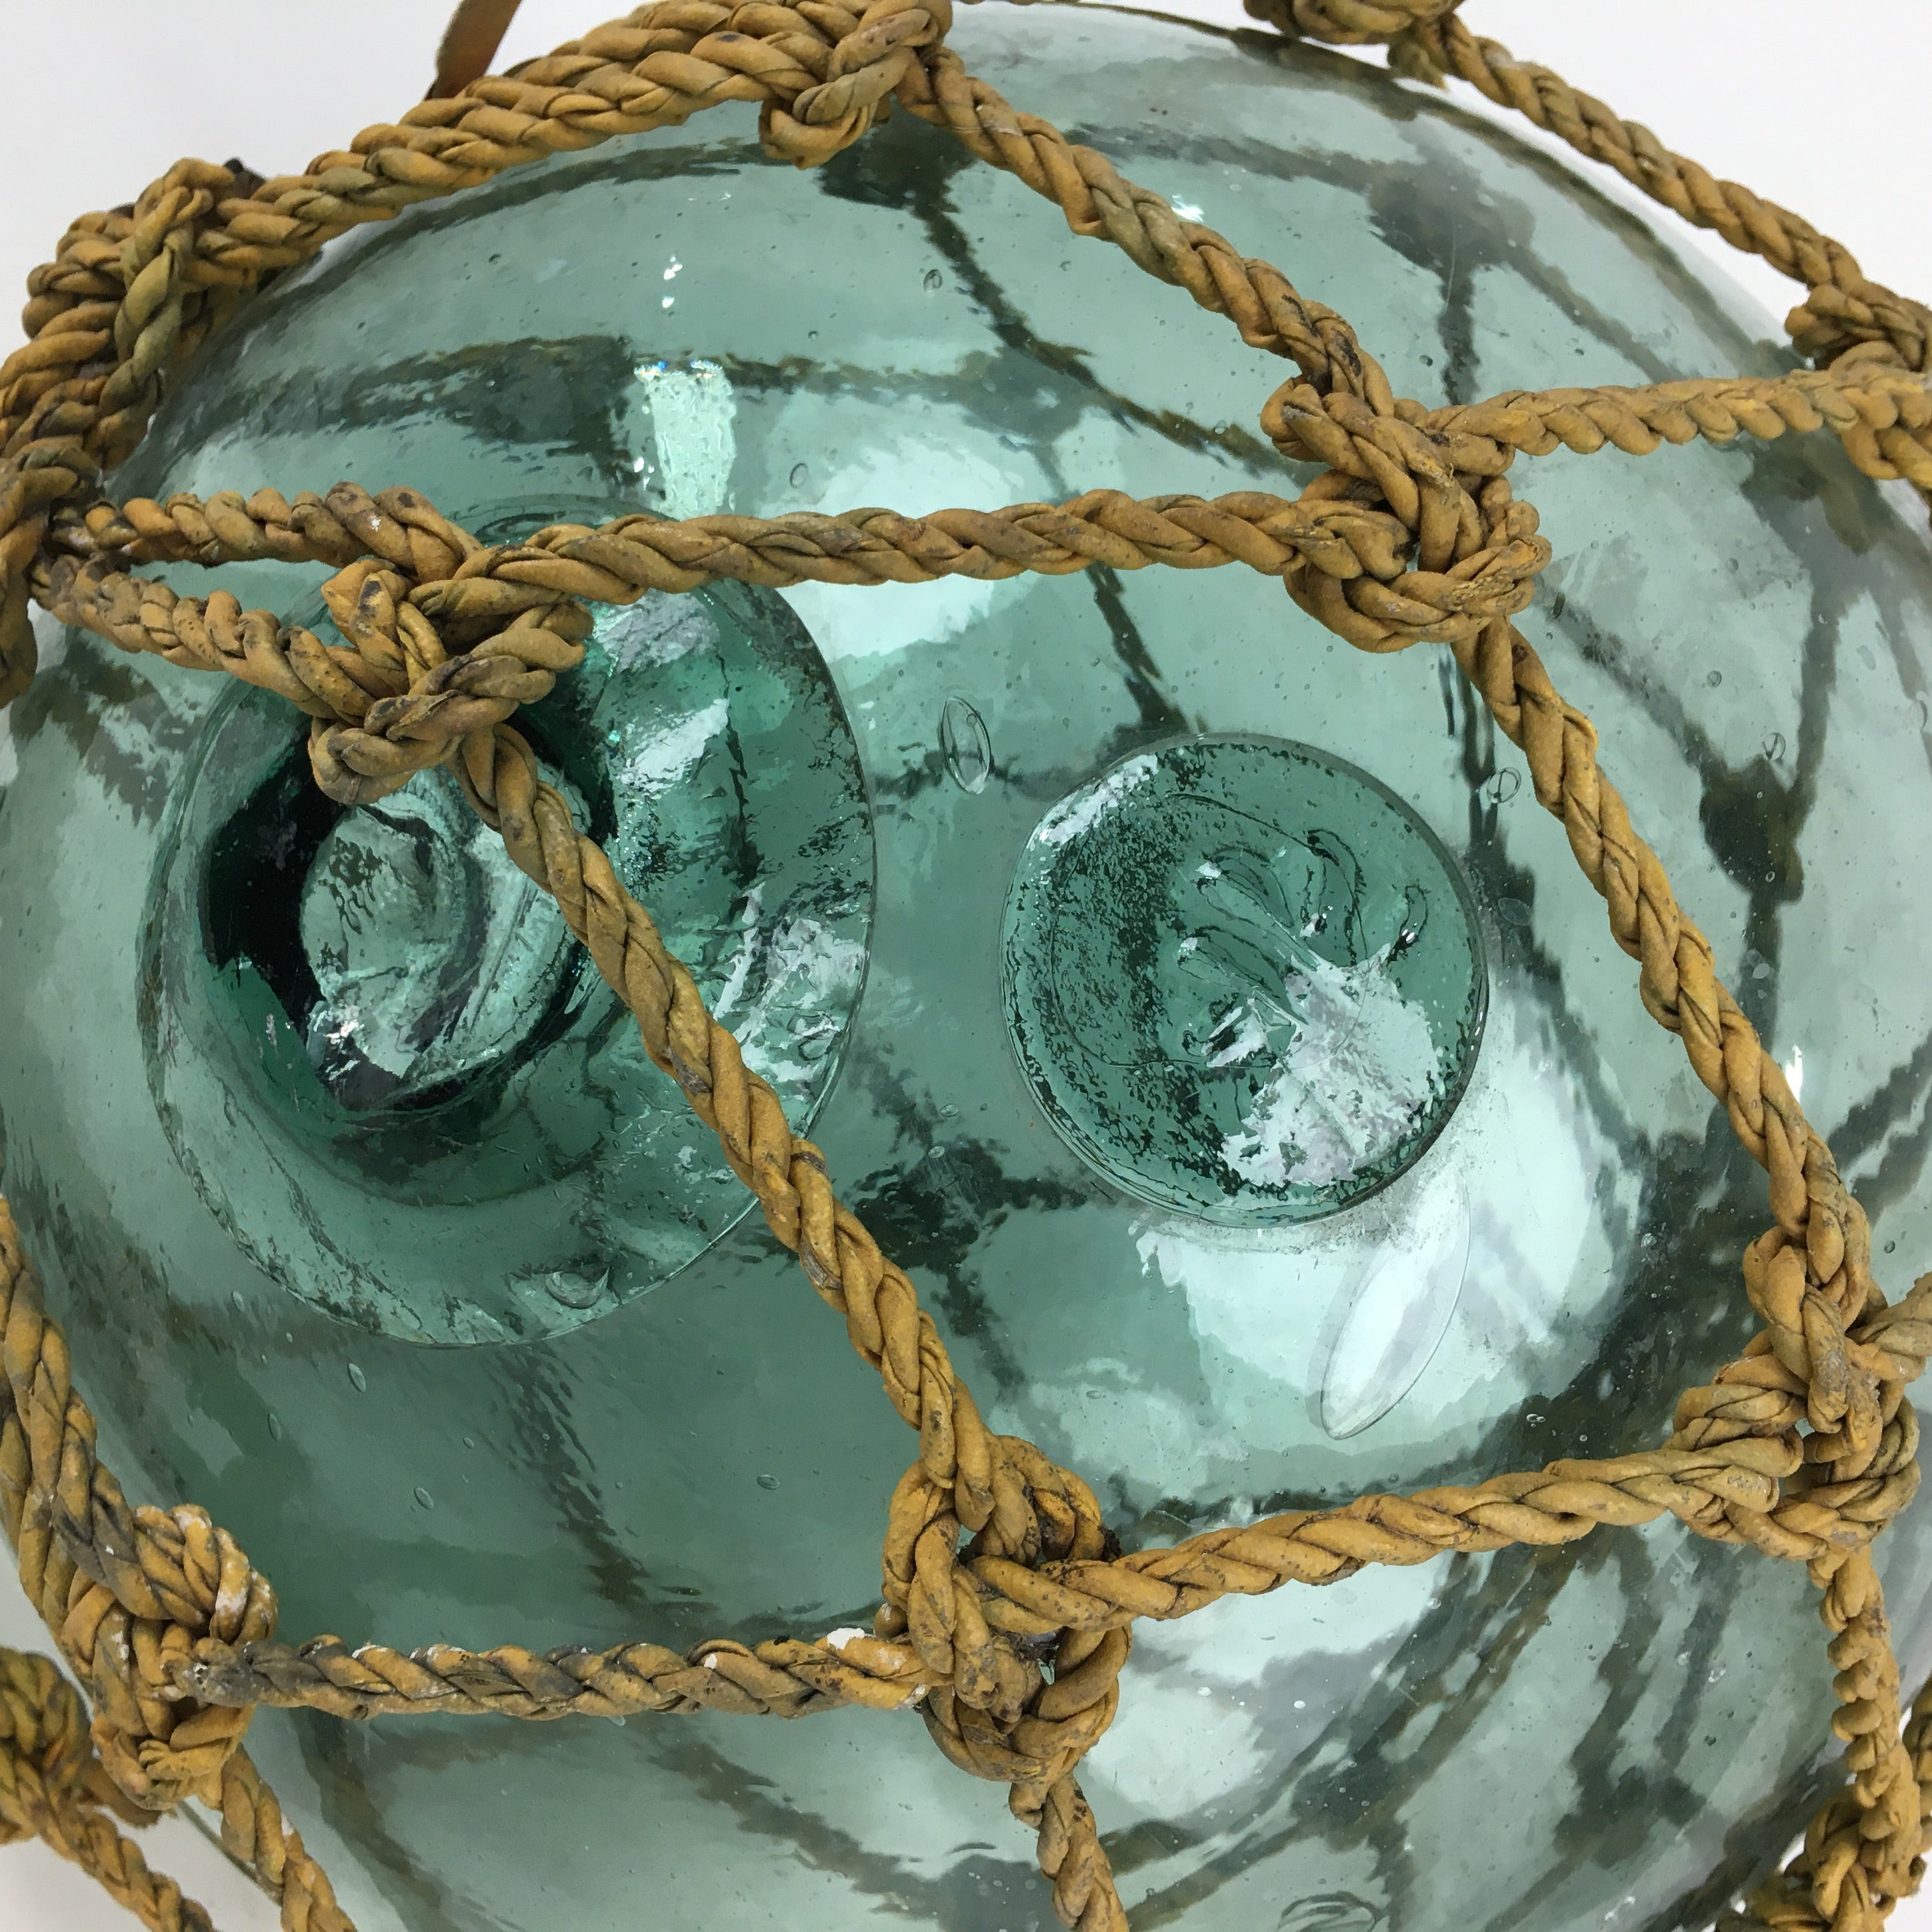 Authentic Huge Handmade Blown Glass Fishing Net Float Buoy Ball